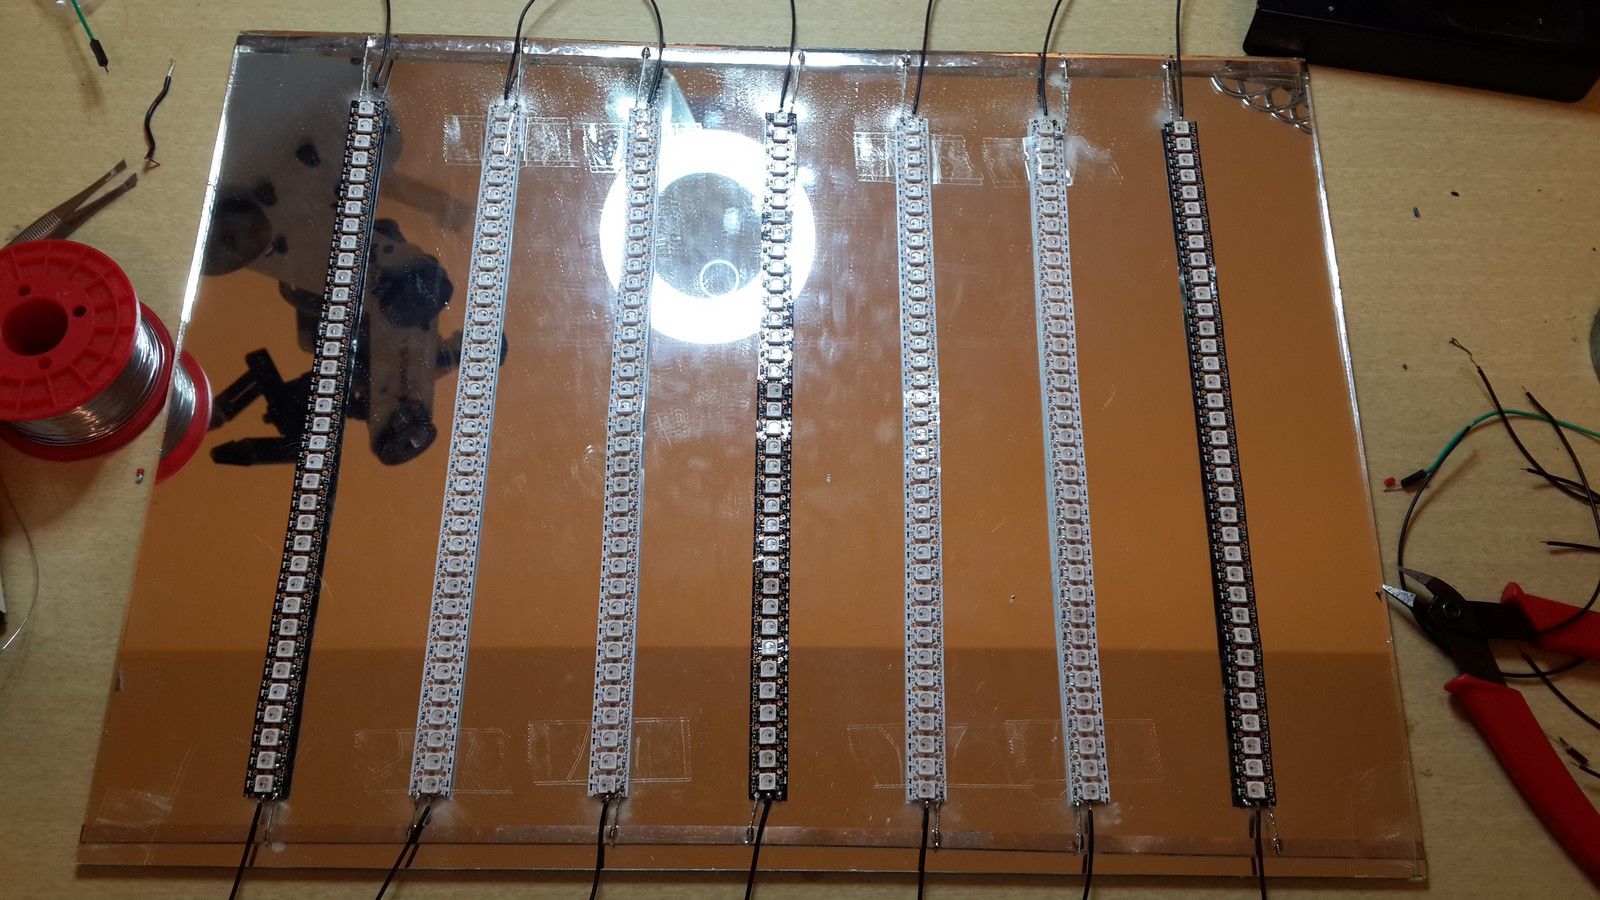 WS2812 7 led strips on mirror